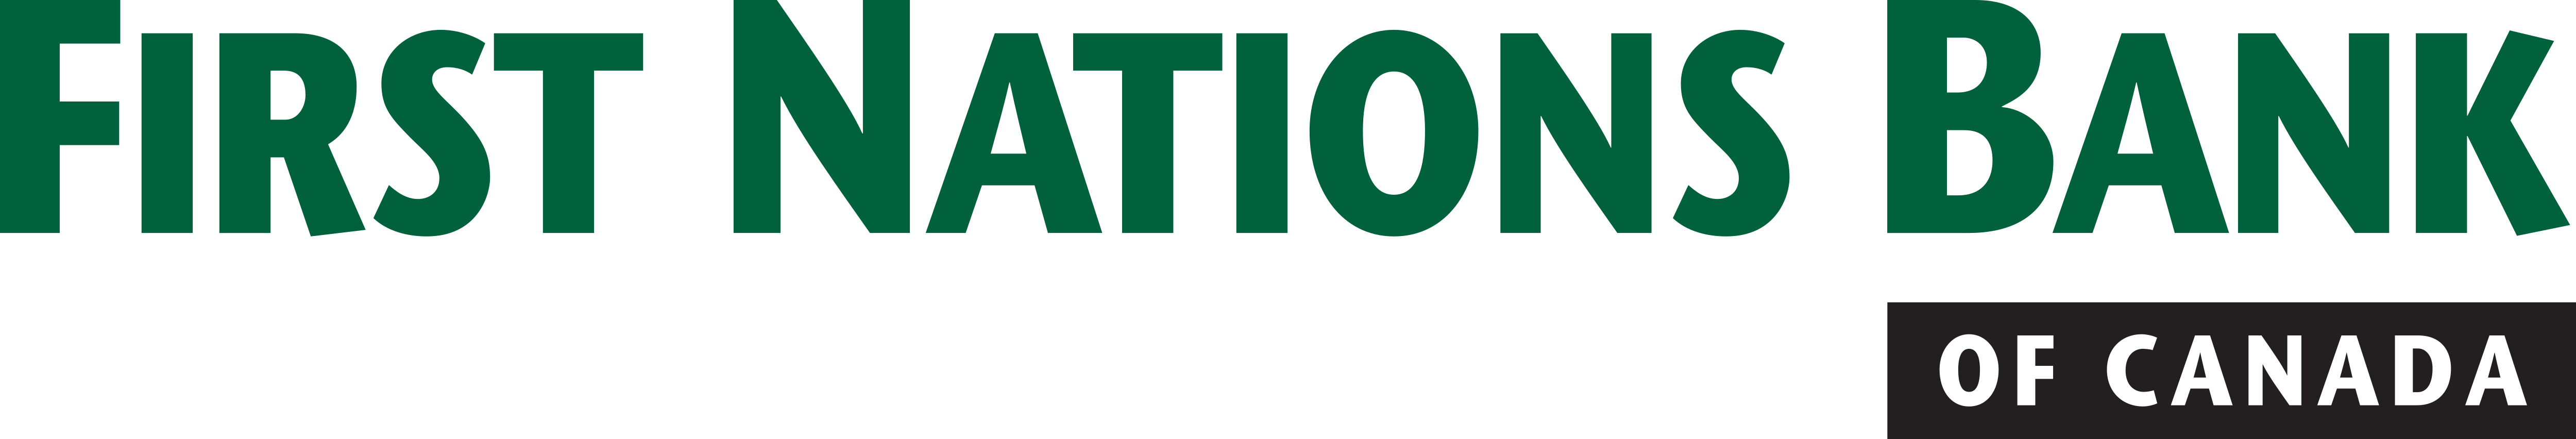 National Bank of Canada. Canada's first Nations. Премиум натион банк. National Bank of Canada logo.